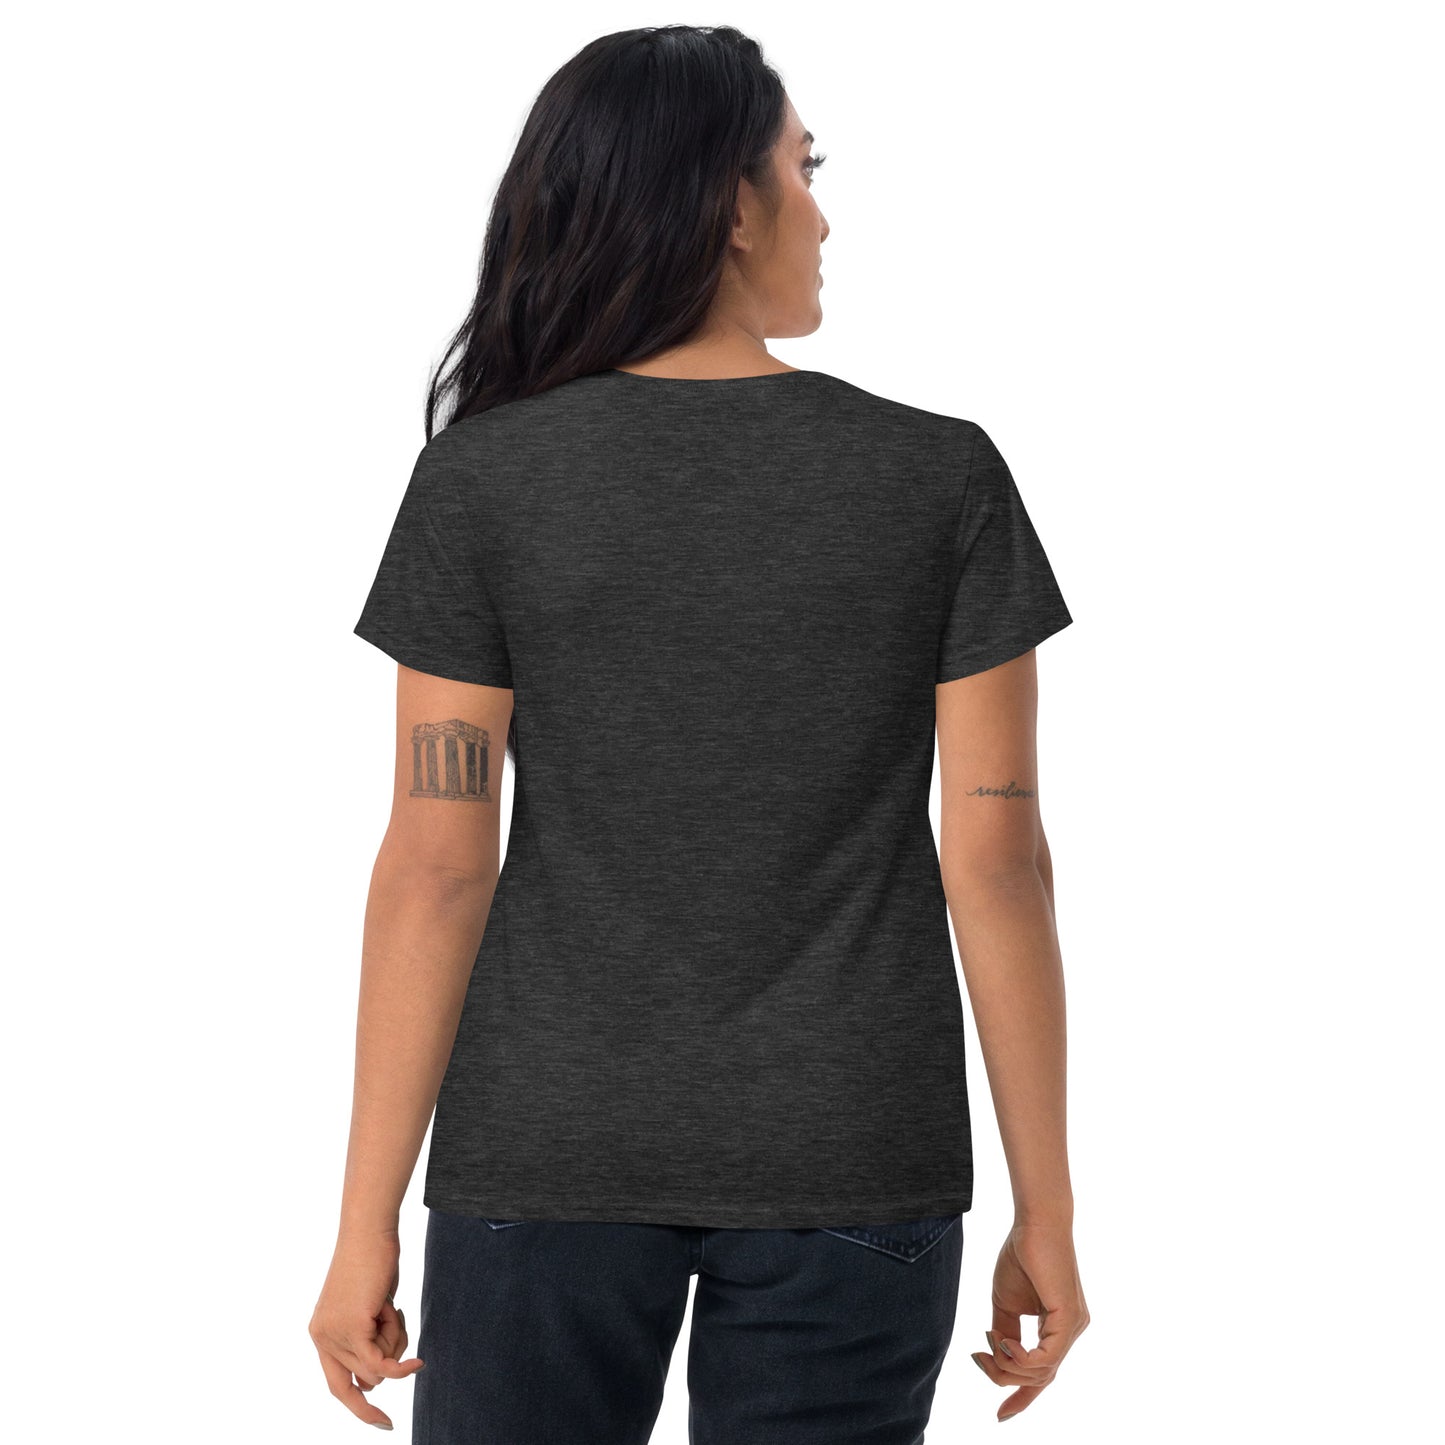 Vintage Muscle Women's Short Sleeve T-shirt